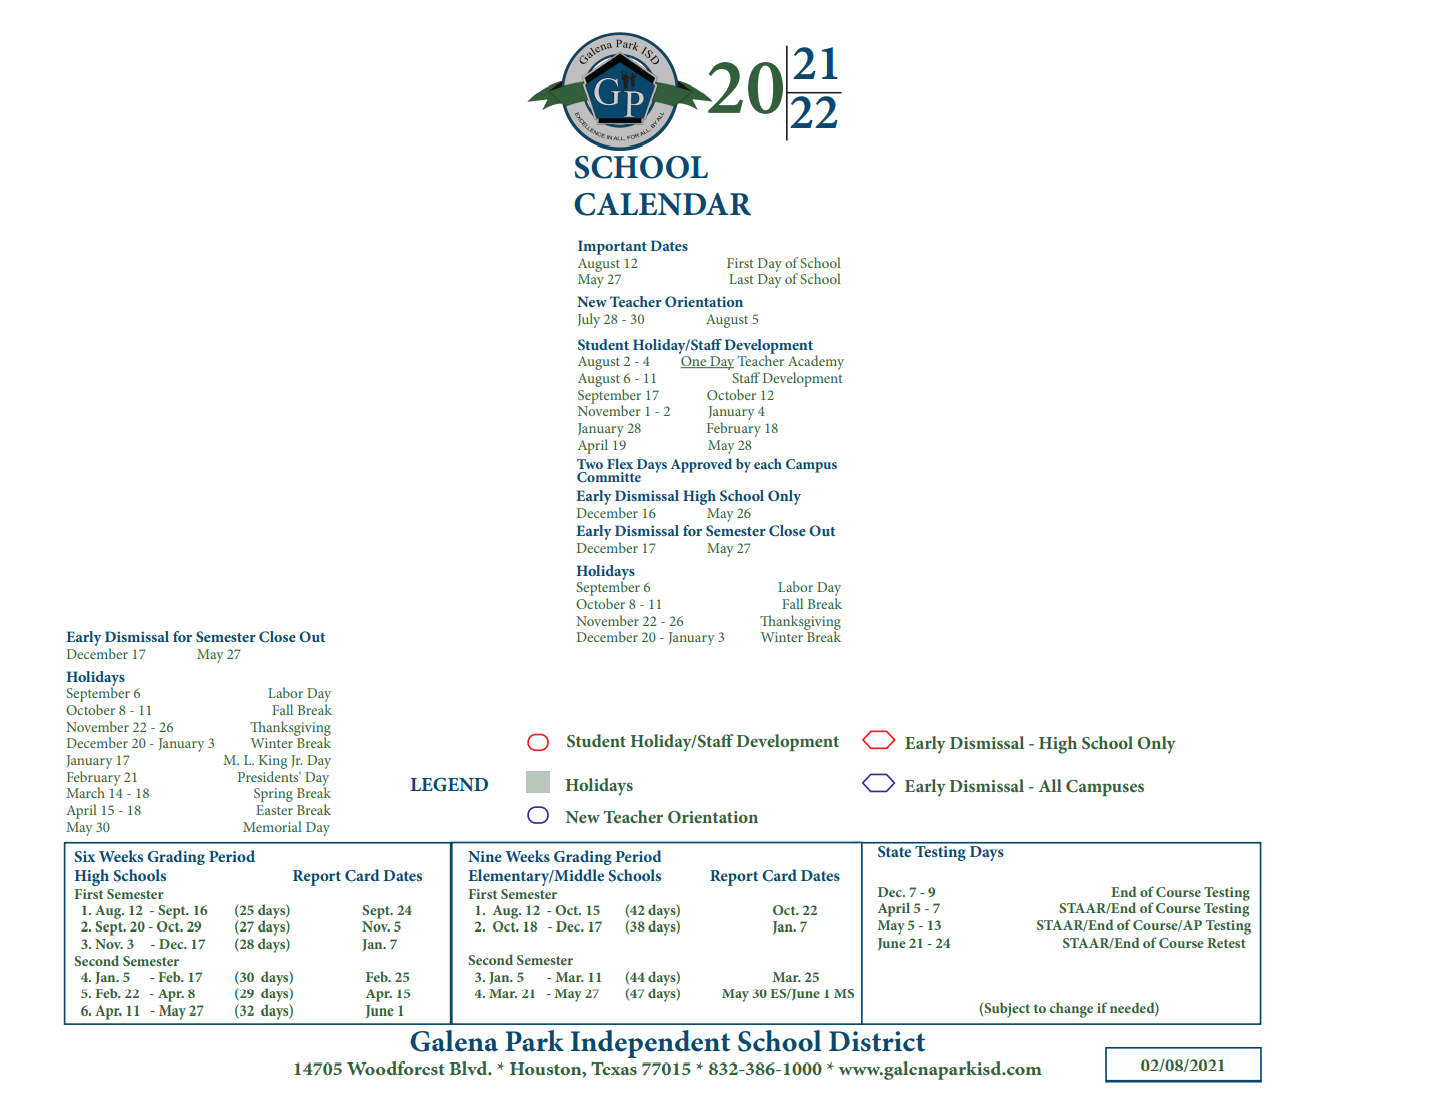 District School Academic Calendar Key for Woodland Acres Middle